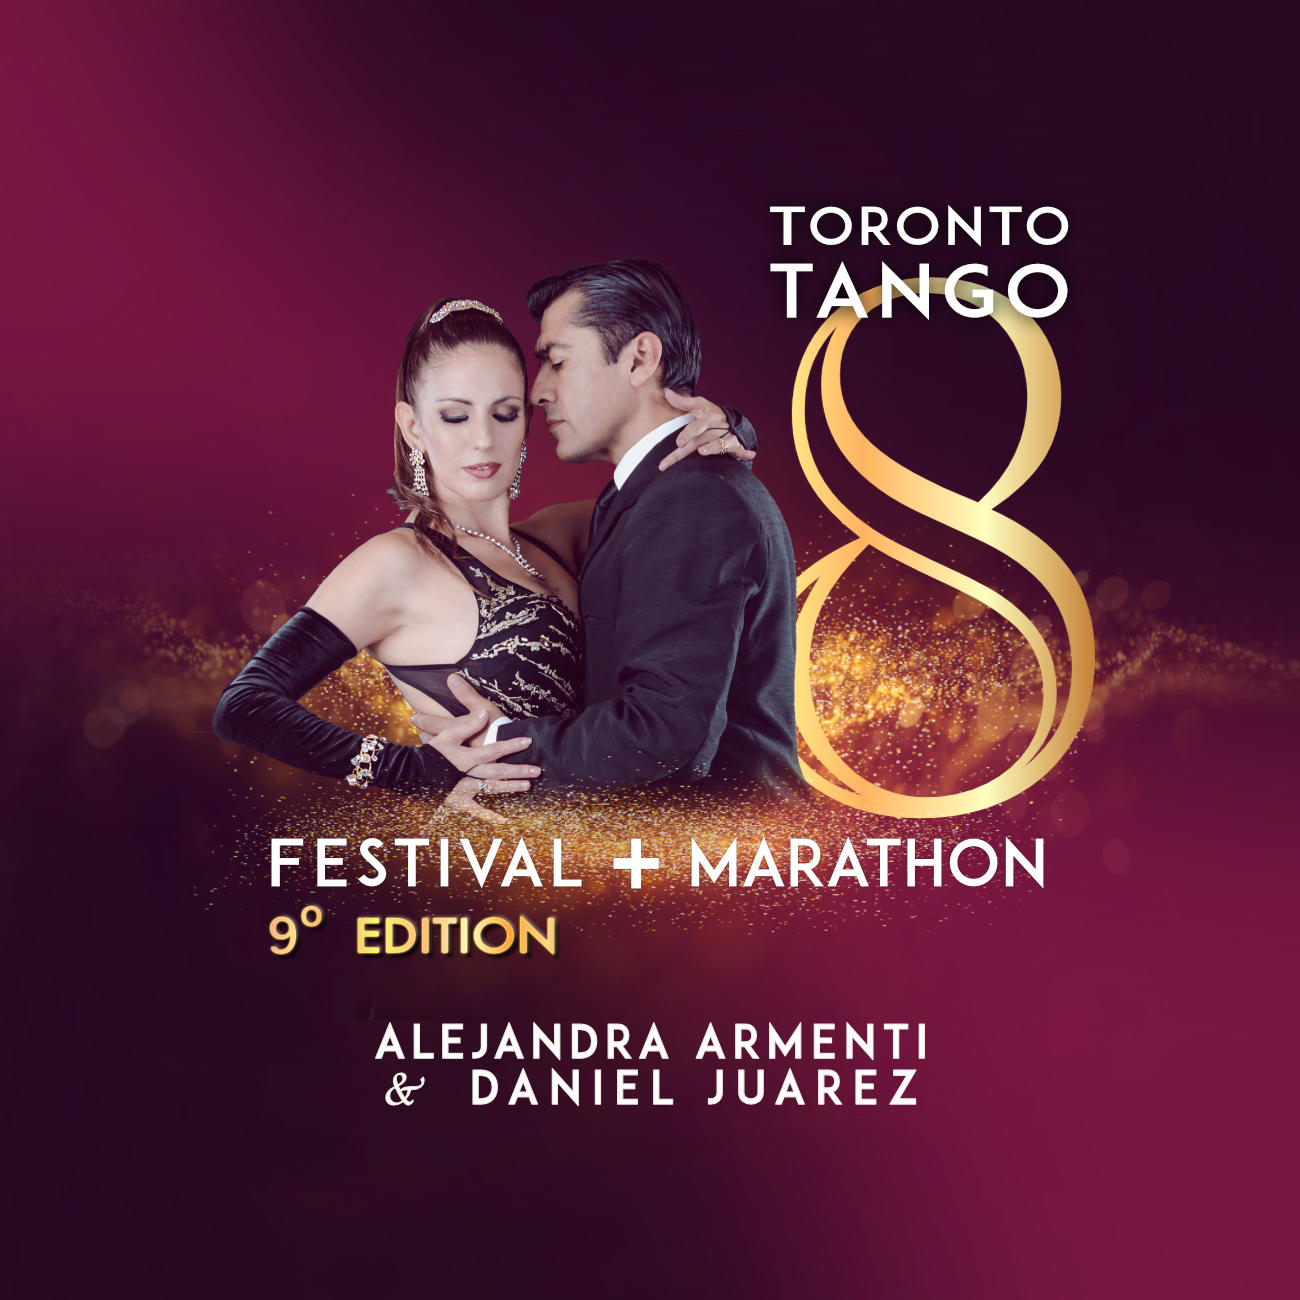 2023 TORONTO TANGO 8 FESTIVAL ★ MARATHON, BIGGEST Tango Festival